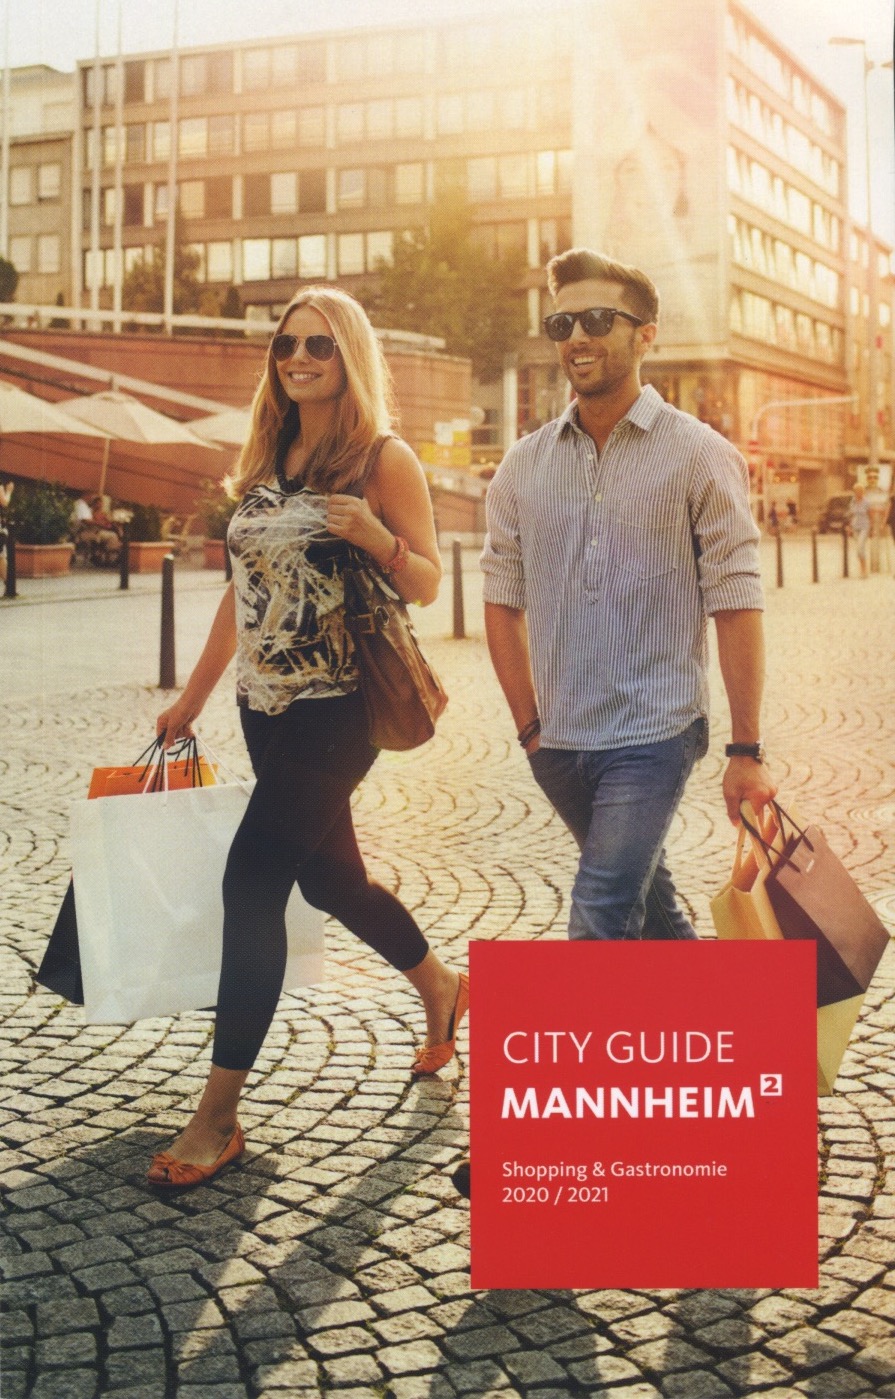 City Guide Mannheim - Shopping & Gastronomie 2020 / 2021